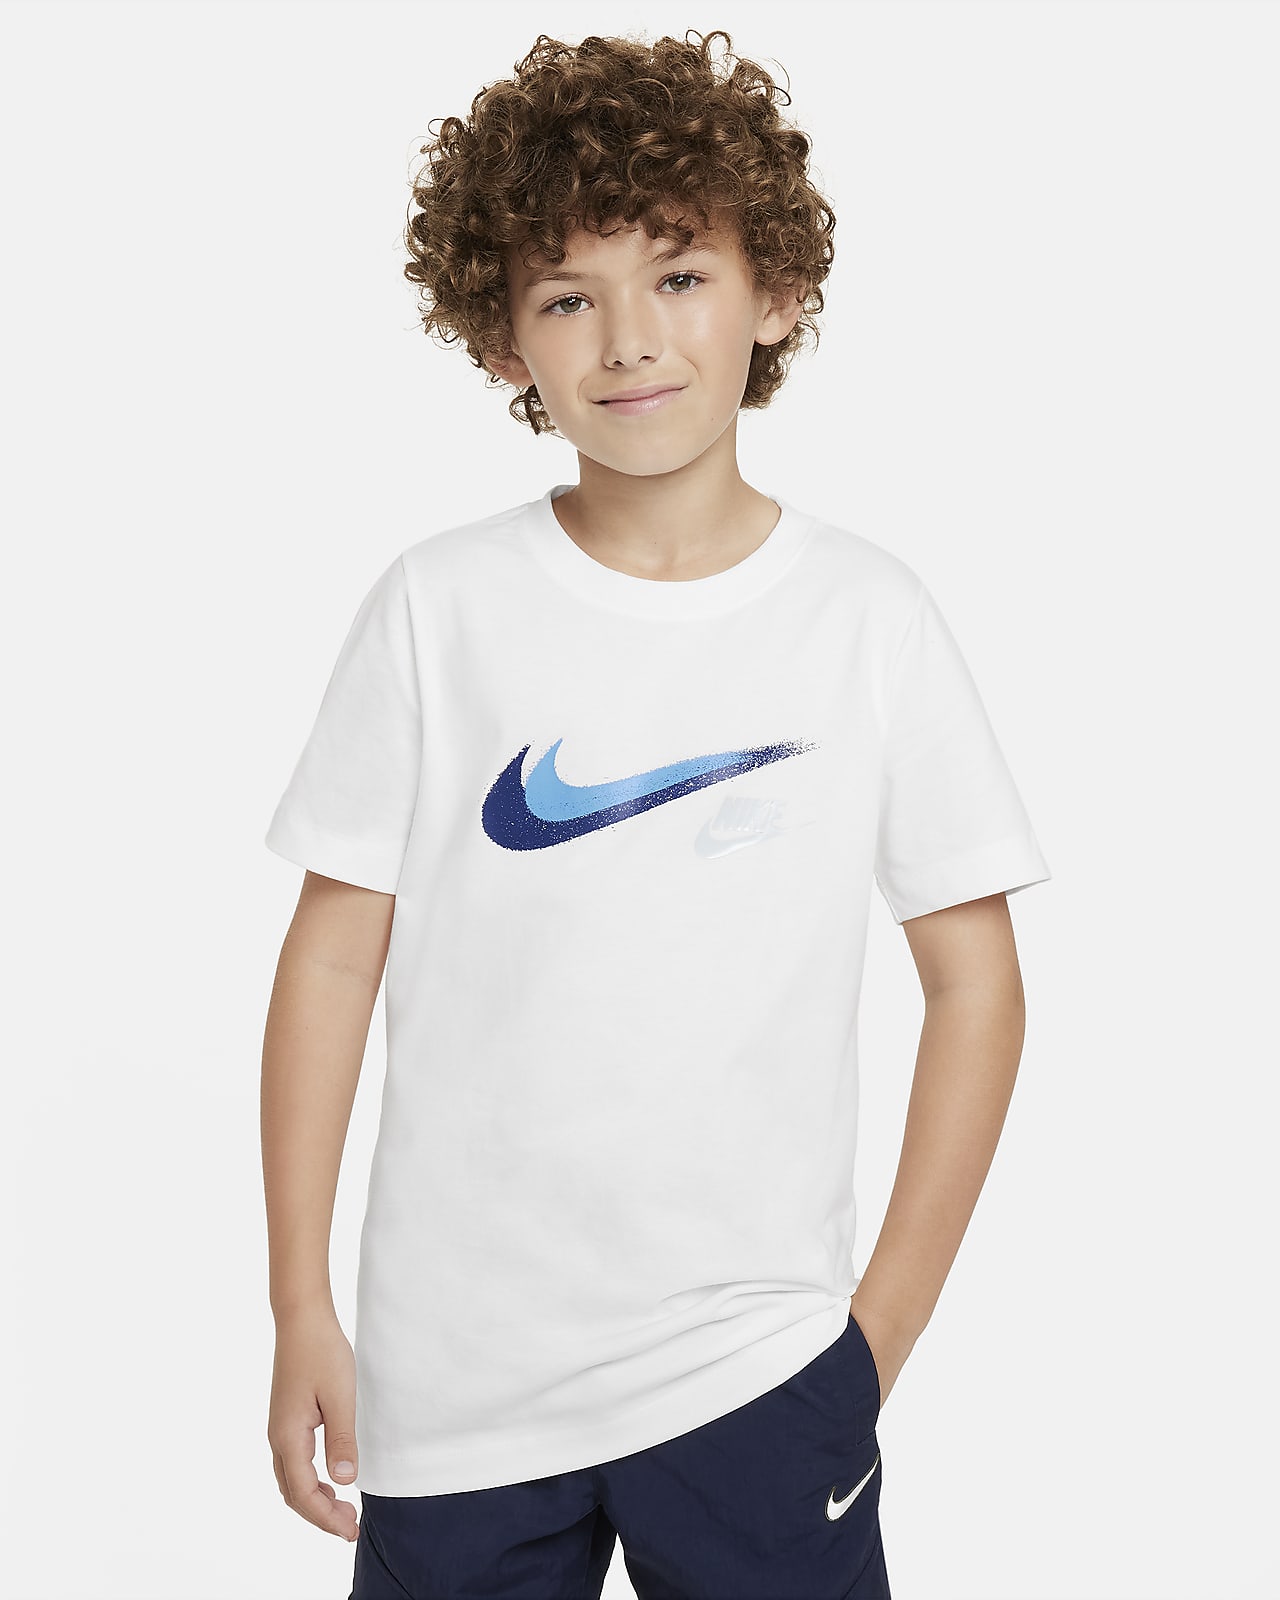 Grafisk Nike Sportswear-T-shirt til større børn (drenge)